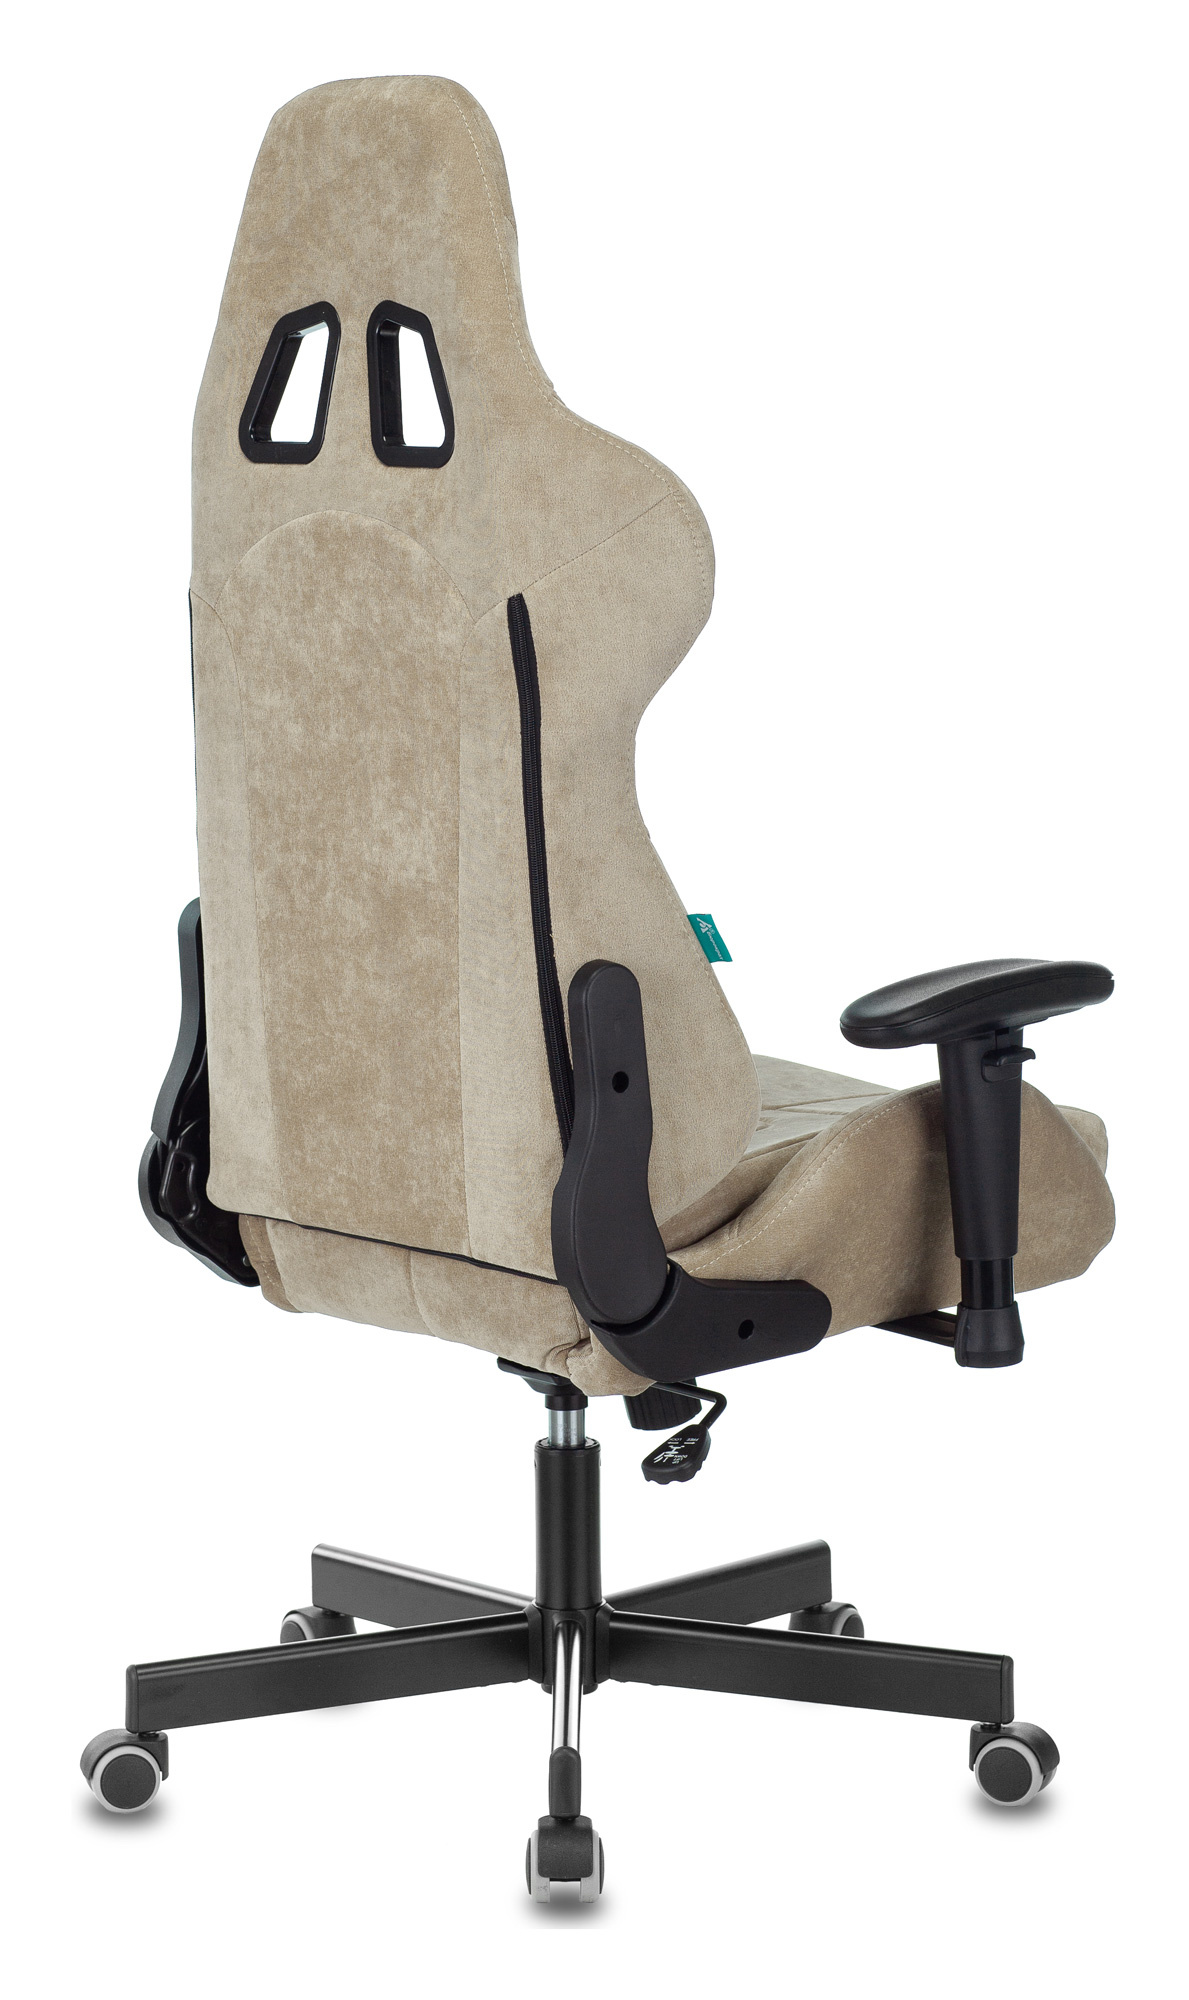 Кресло игровое Zombie VIKING KNIGHT, обивка: ткань, цвет: песочный (VIKING KNIGHT LT21) от магазина Buro.store